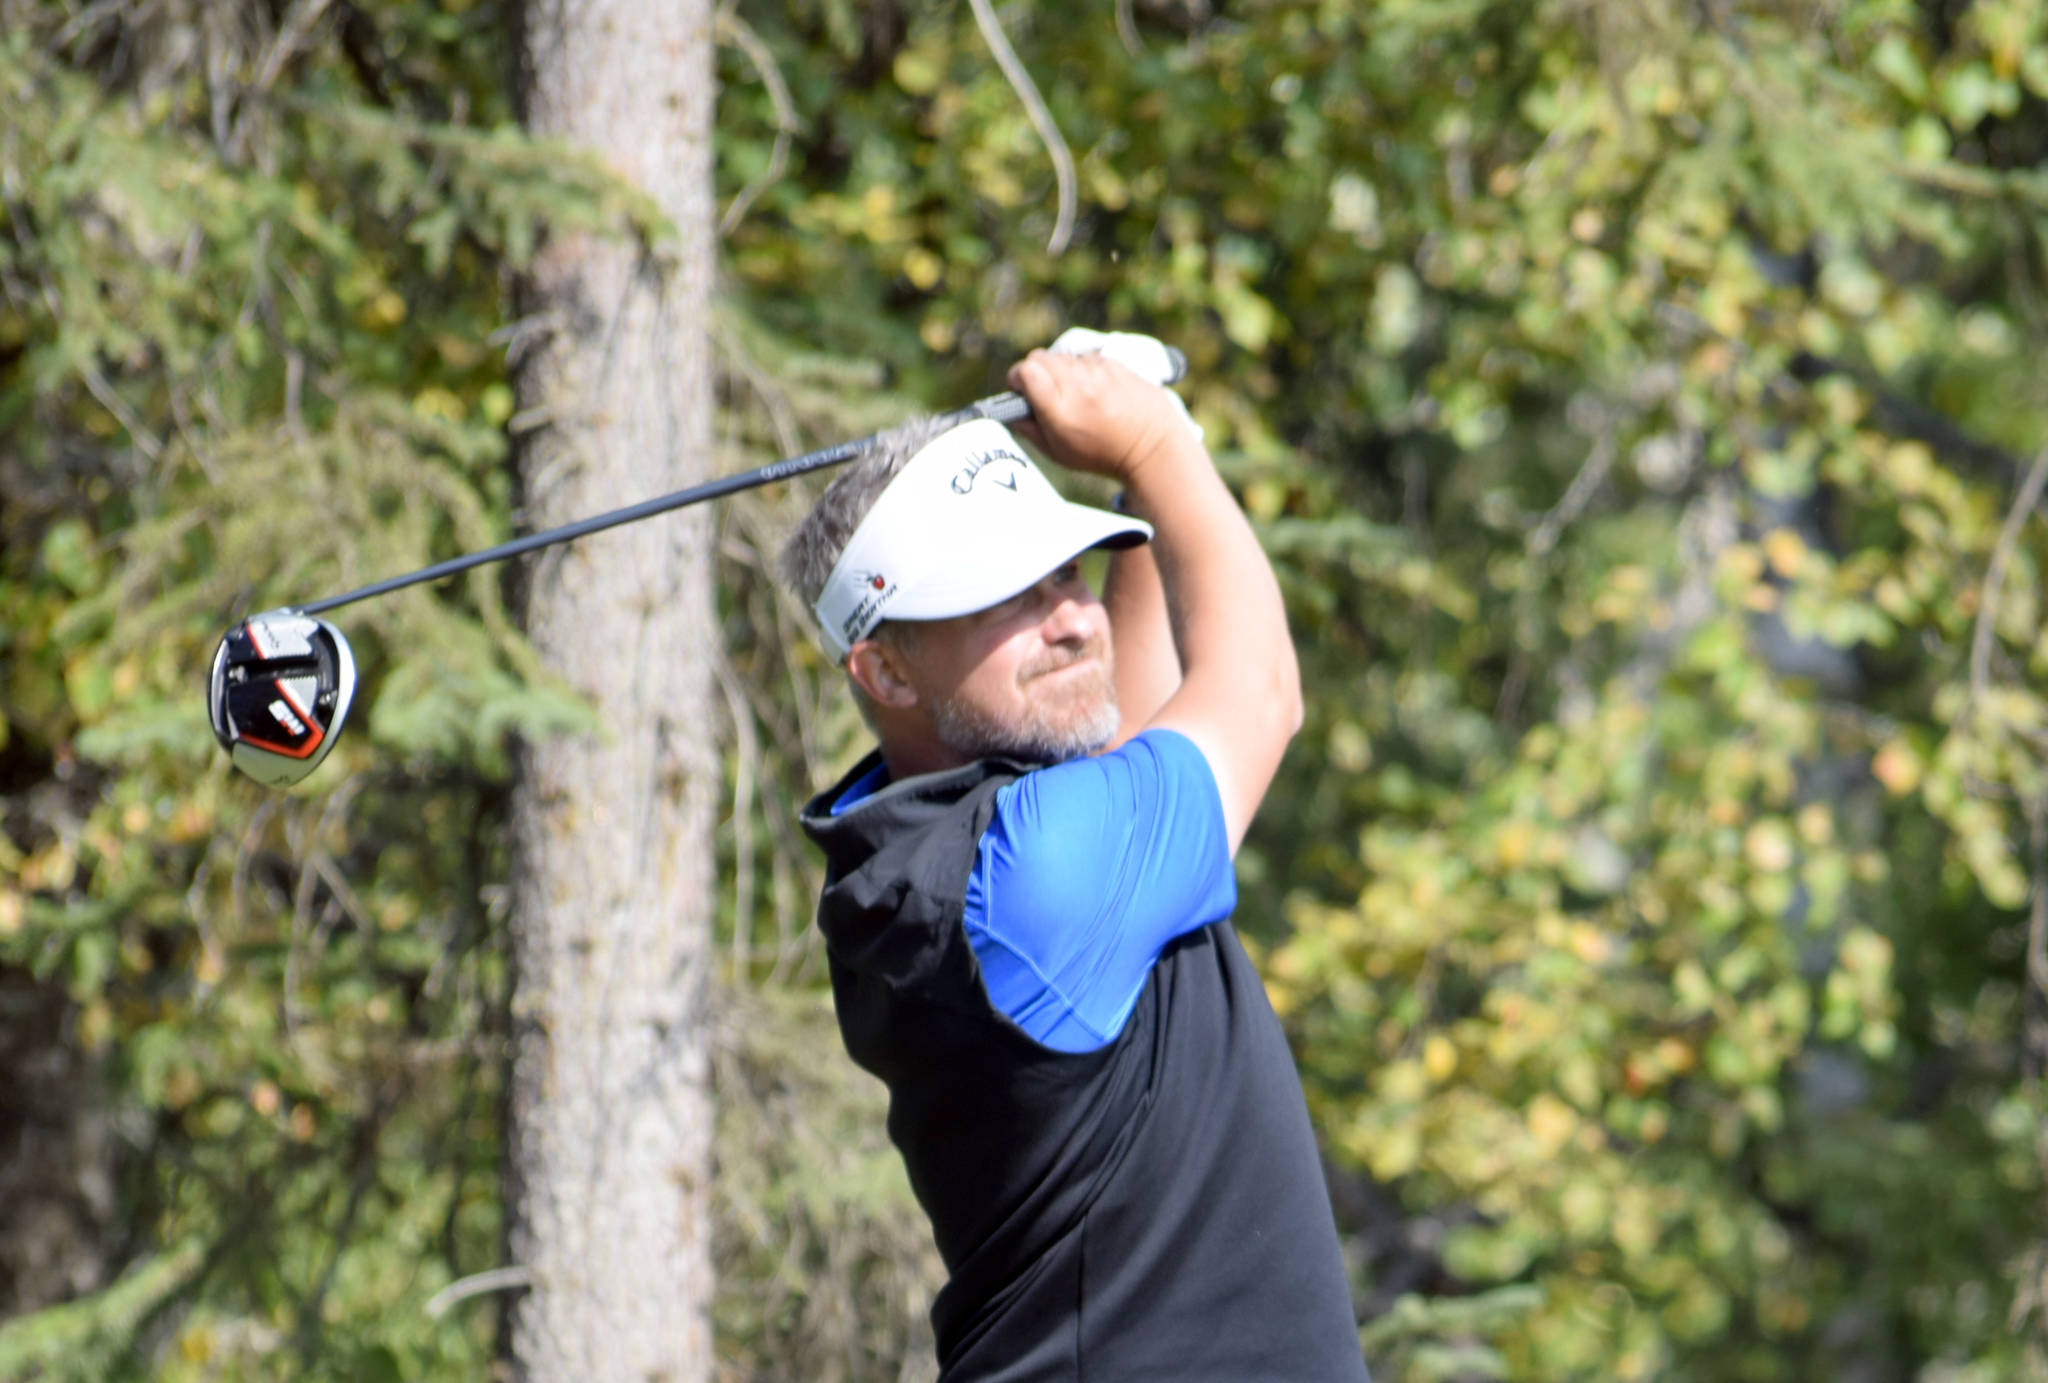 Nolan Rose, an employee at Birch Ridge Golf Course, tees off on No. 11 on Sunday, Aug. 25, 2019, during the Kenai Peninsula Open at Birch Ridge in Soldotna, Alaska. (Photo by Jeff Helminiak/Peninsula Clarion)